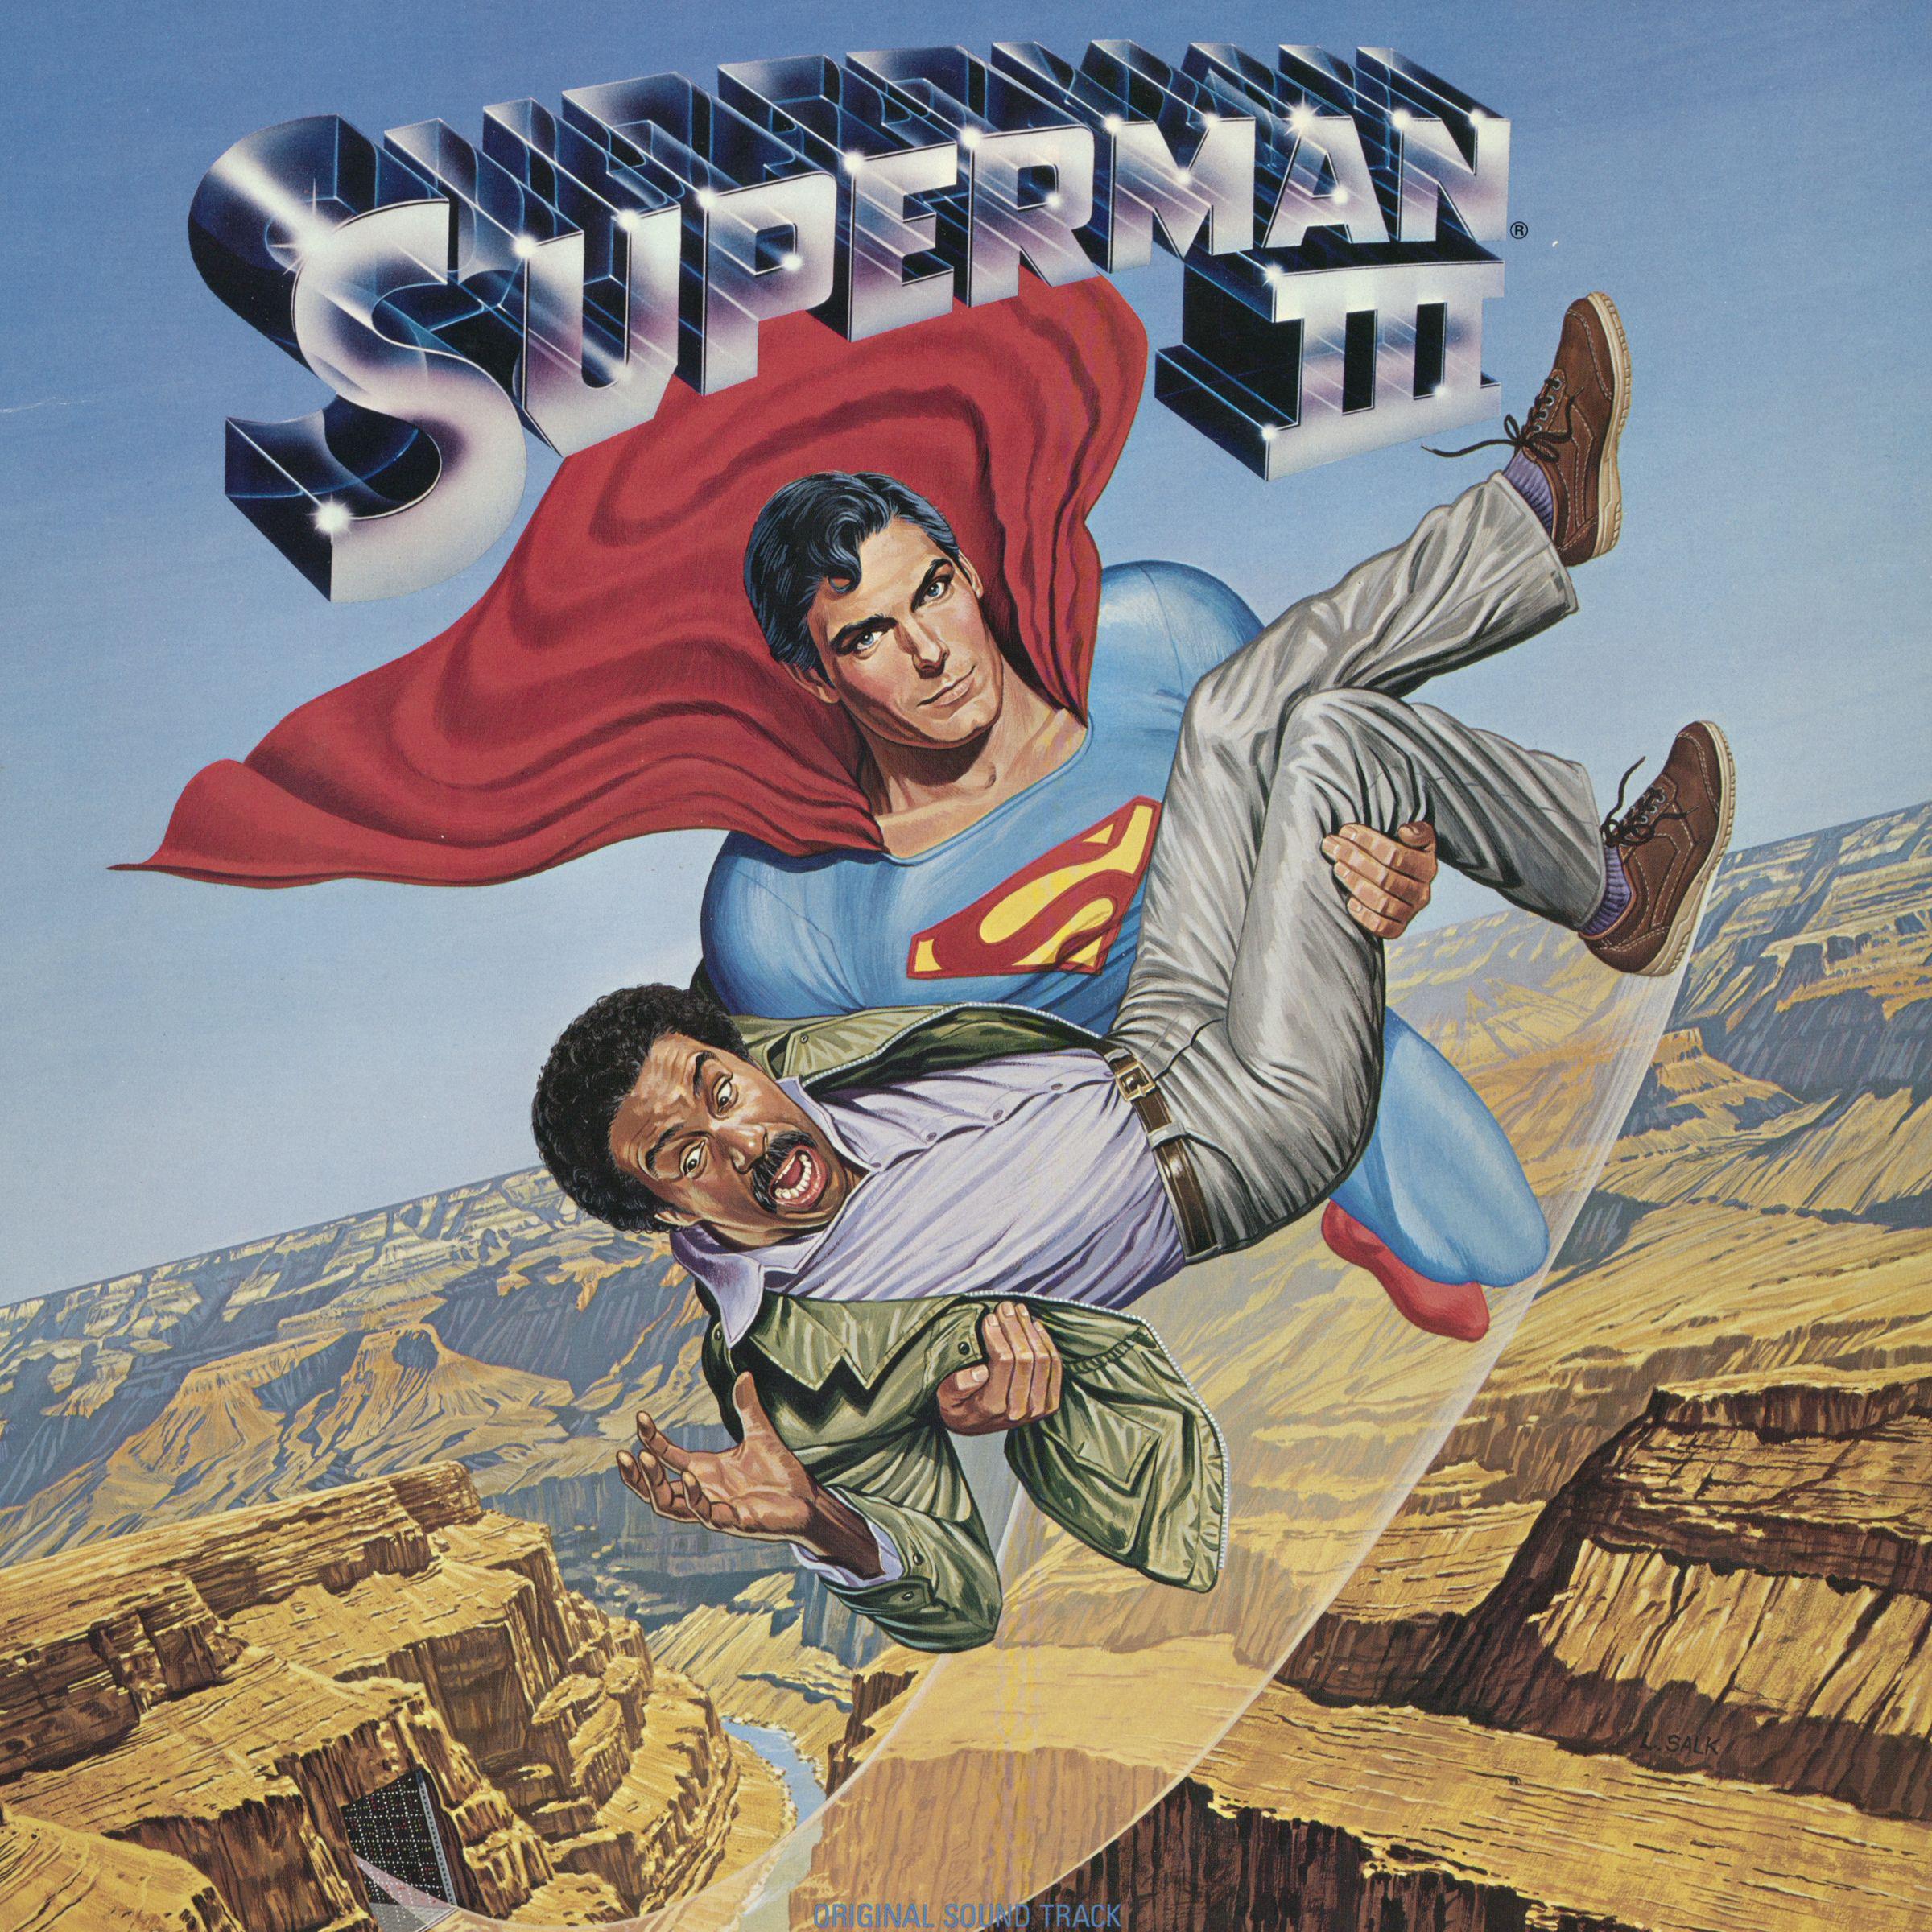 Superman III - Original Soundtrack